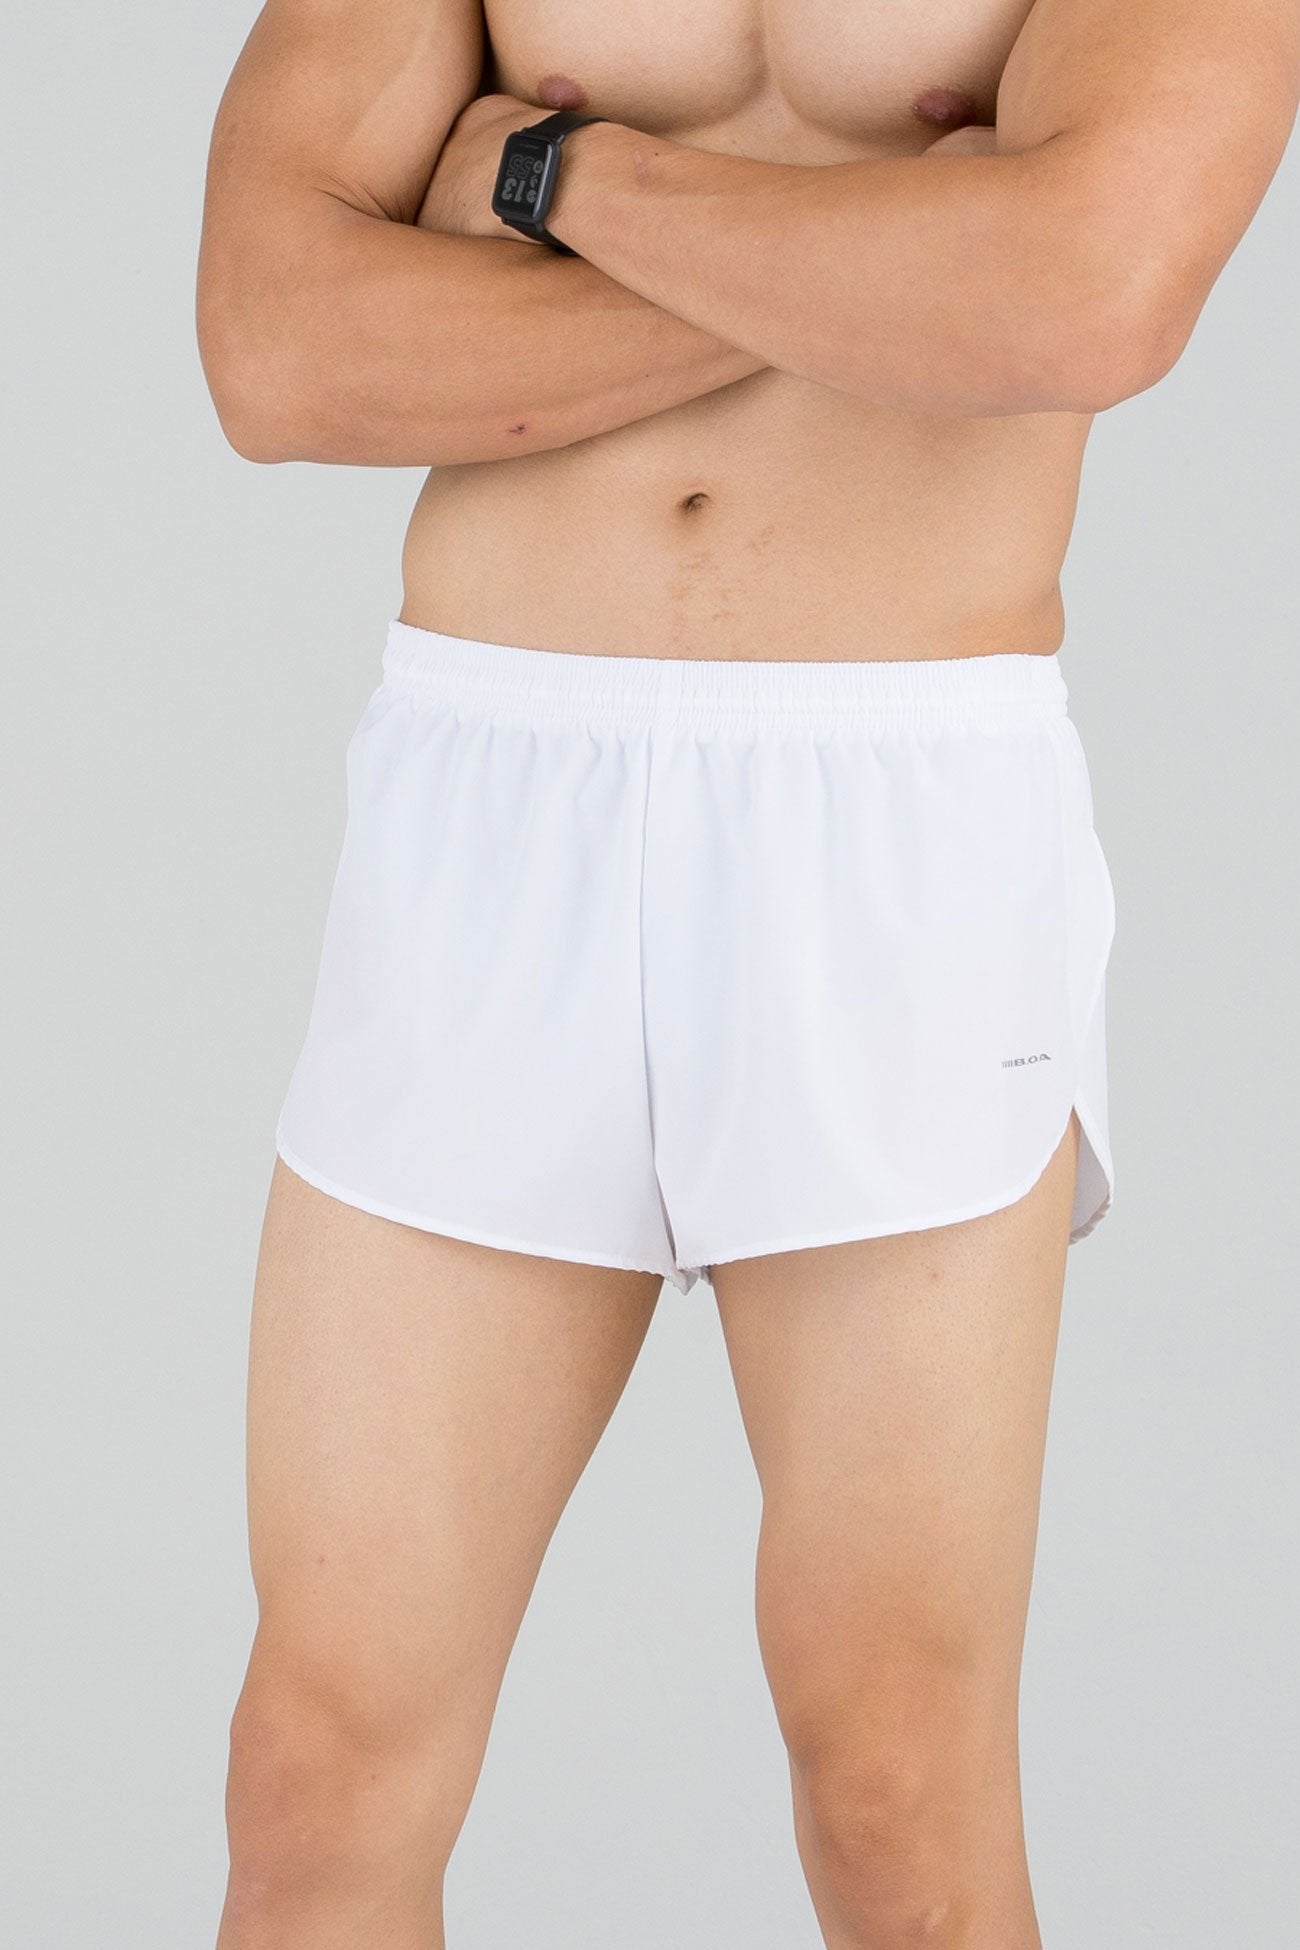 men's white running shorts Shop 